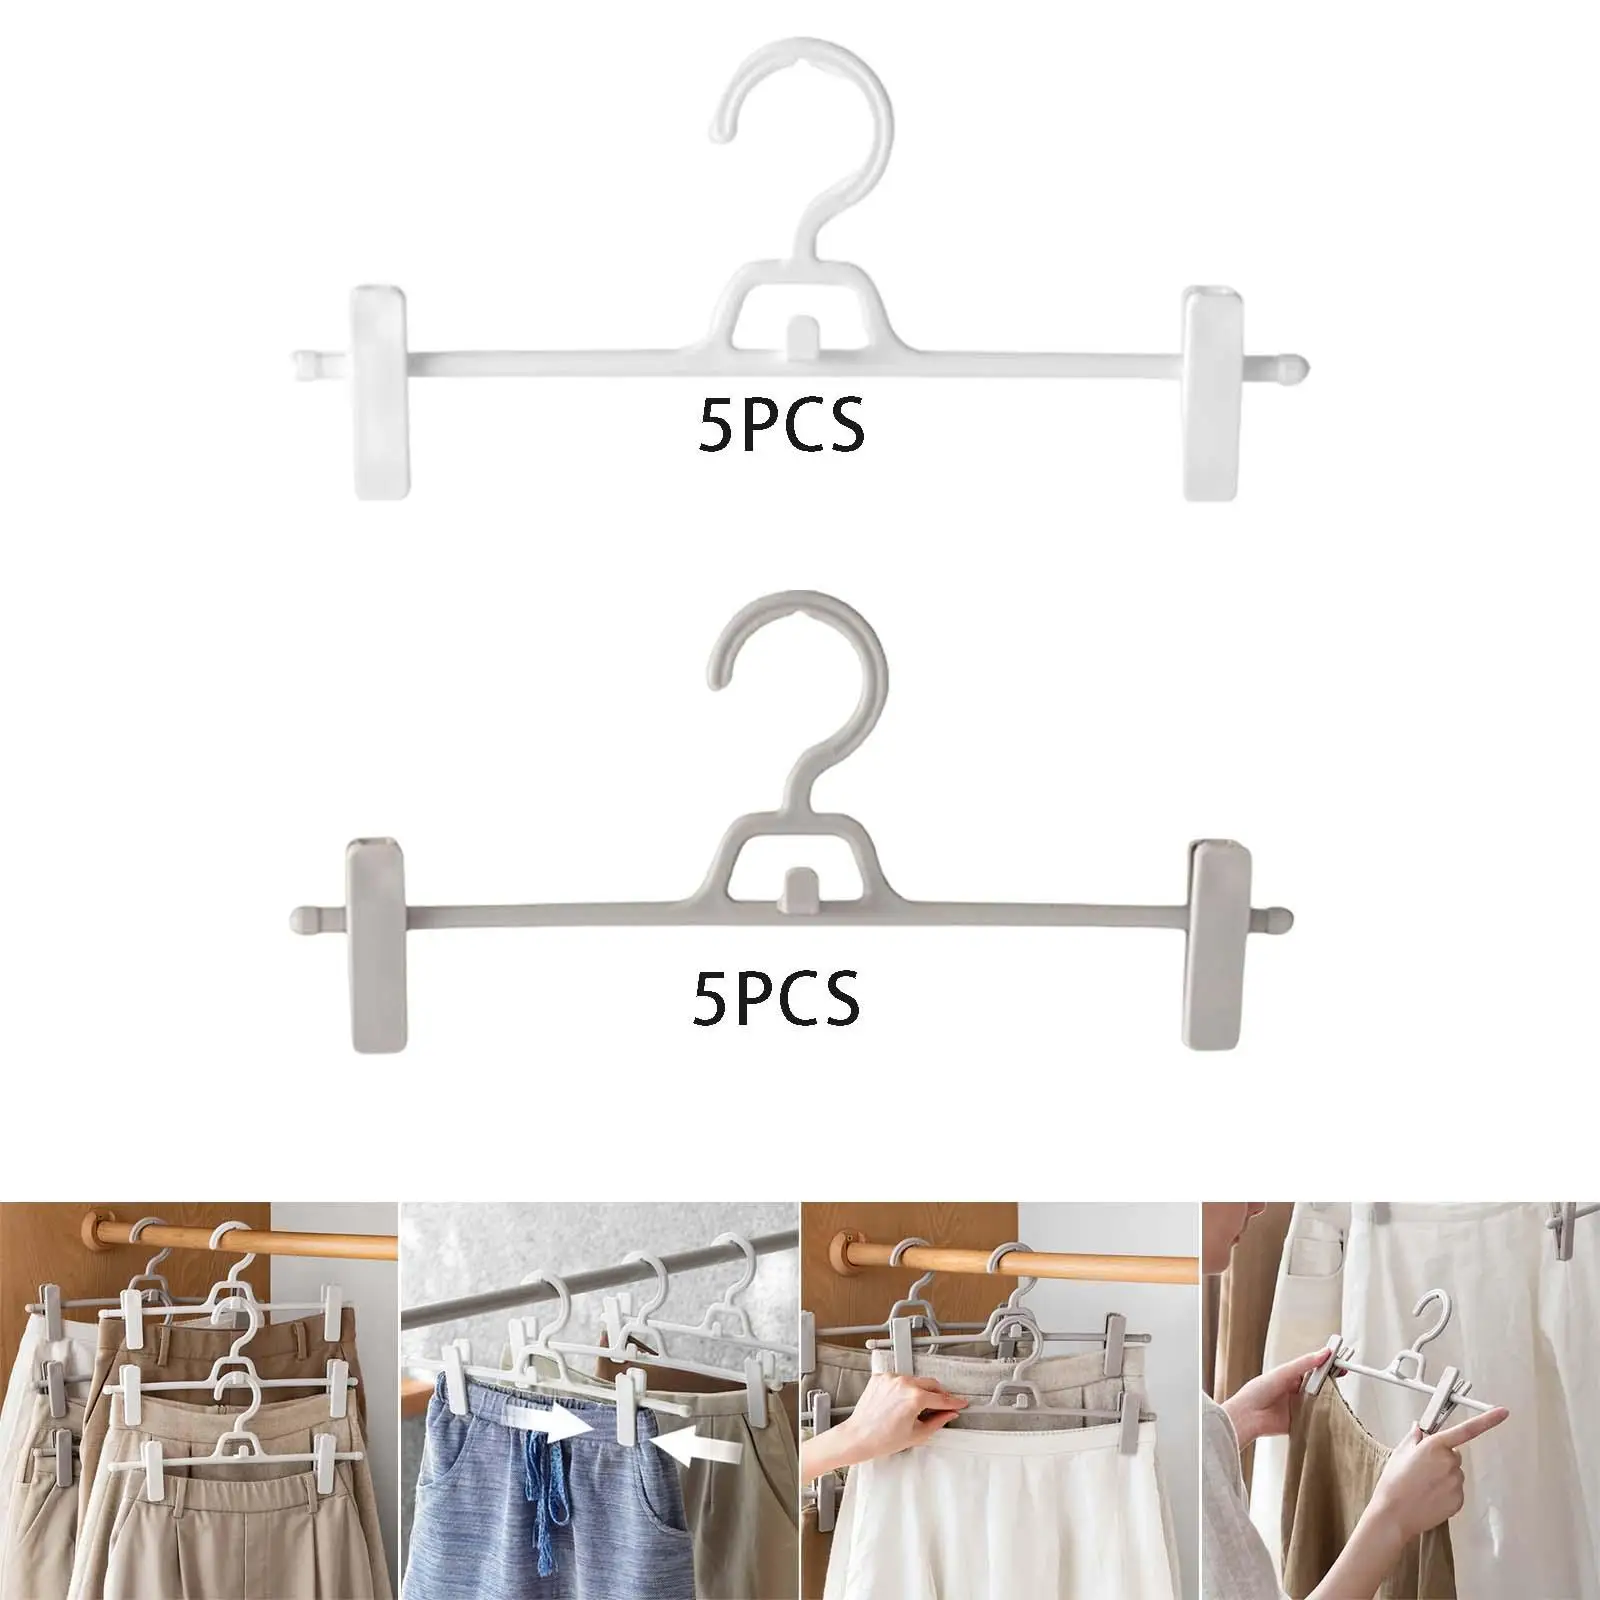 5Pcs Pant Hangers Adult Children Clothes Hangers Garment Clothes Organizer Durable and Sturdy Adjustable Clips Non Slip